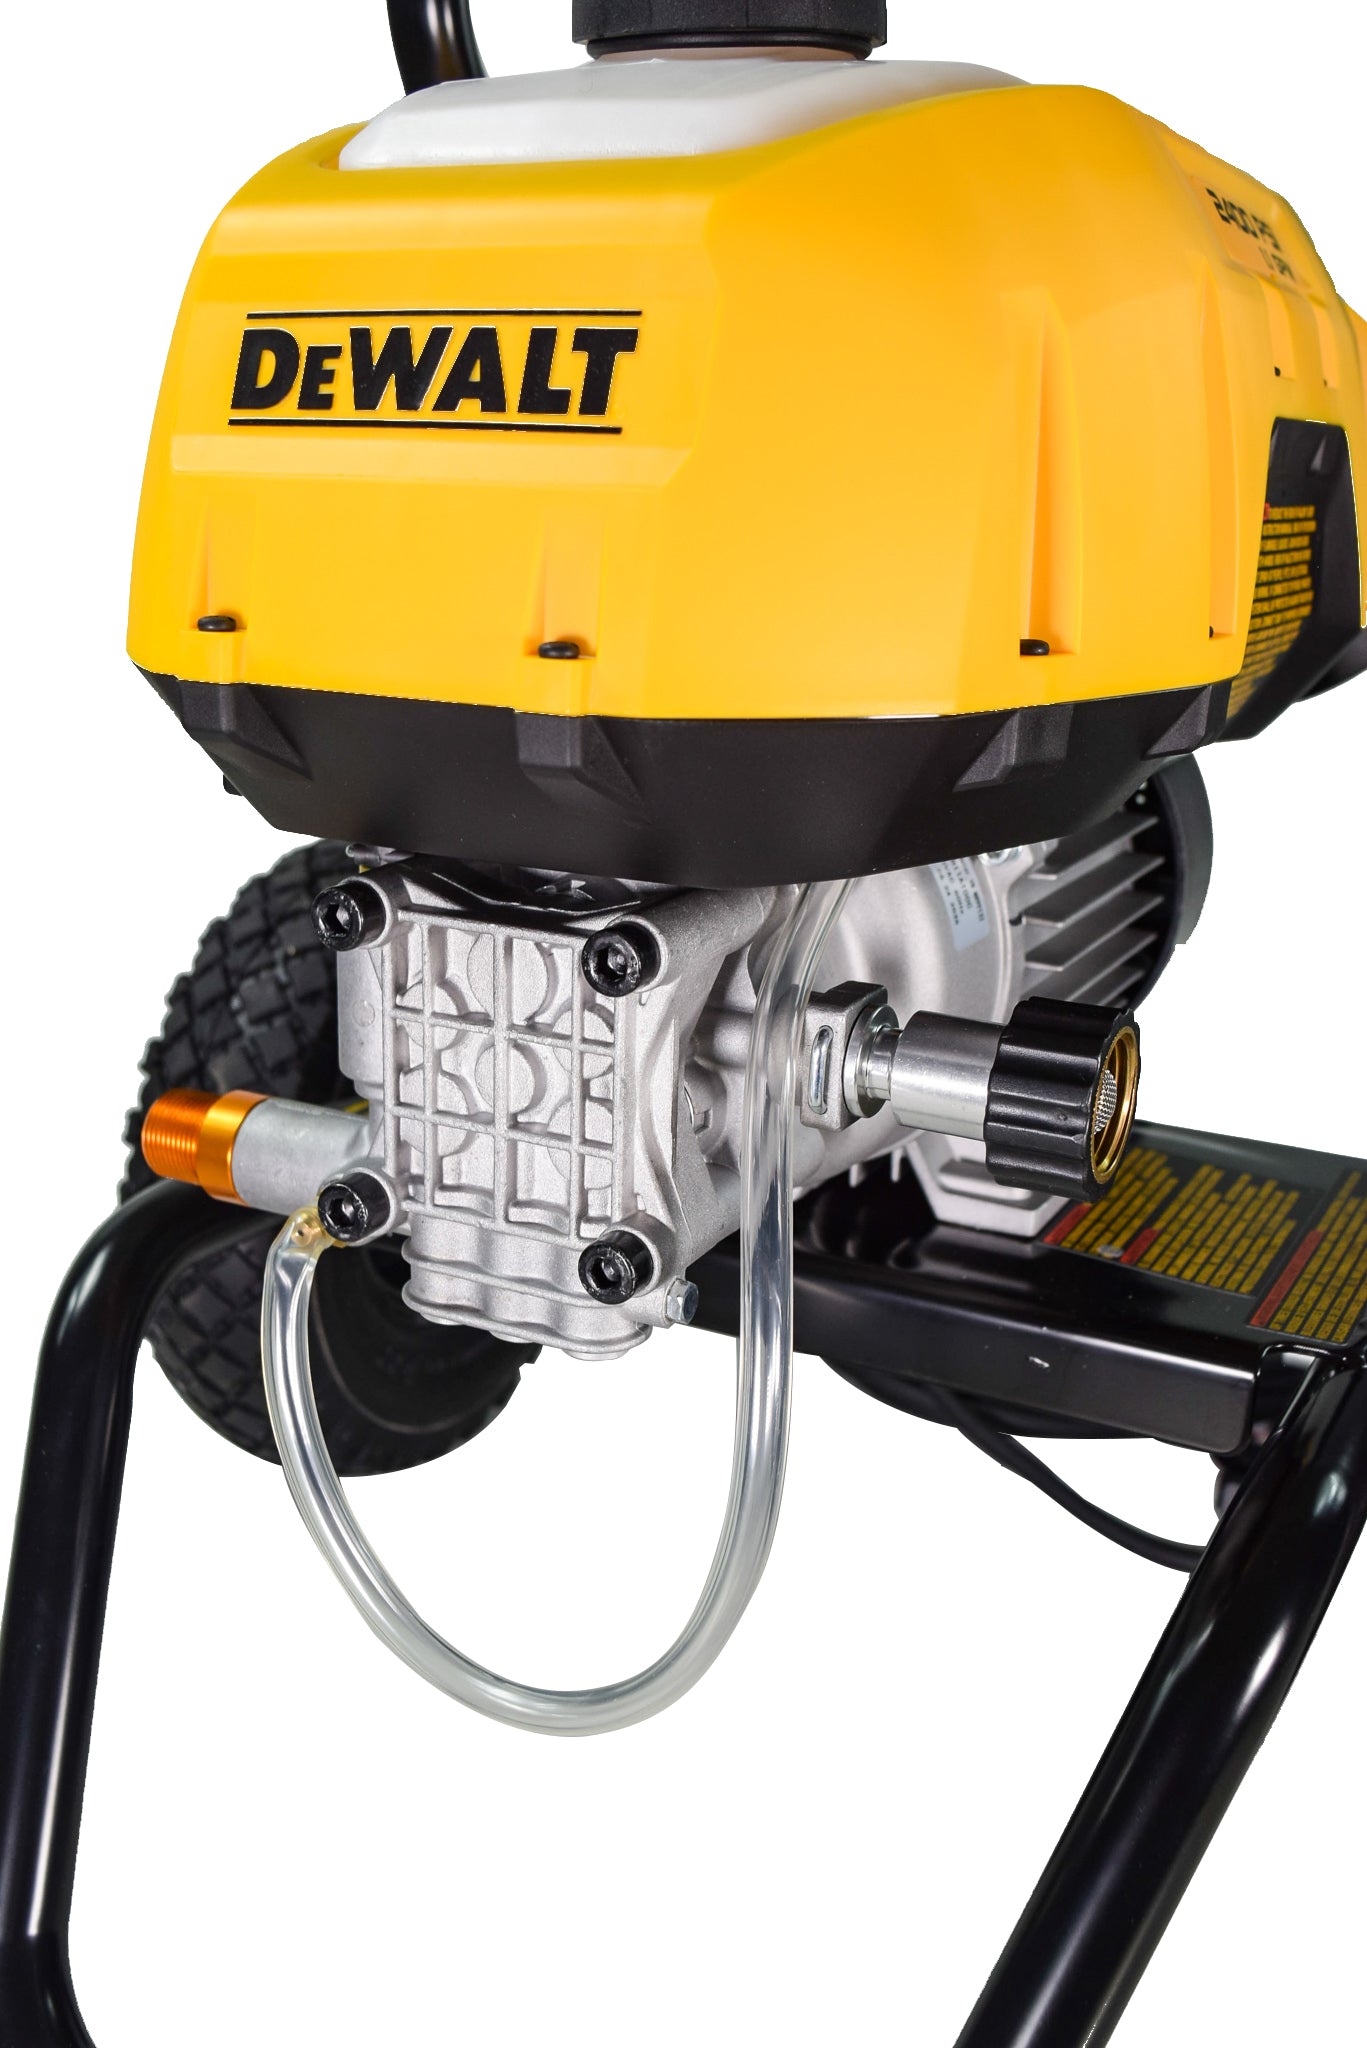 Dewalt DWPW2400 PSI 1.1 GPM Cold Water Electric Pressure Washer